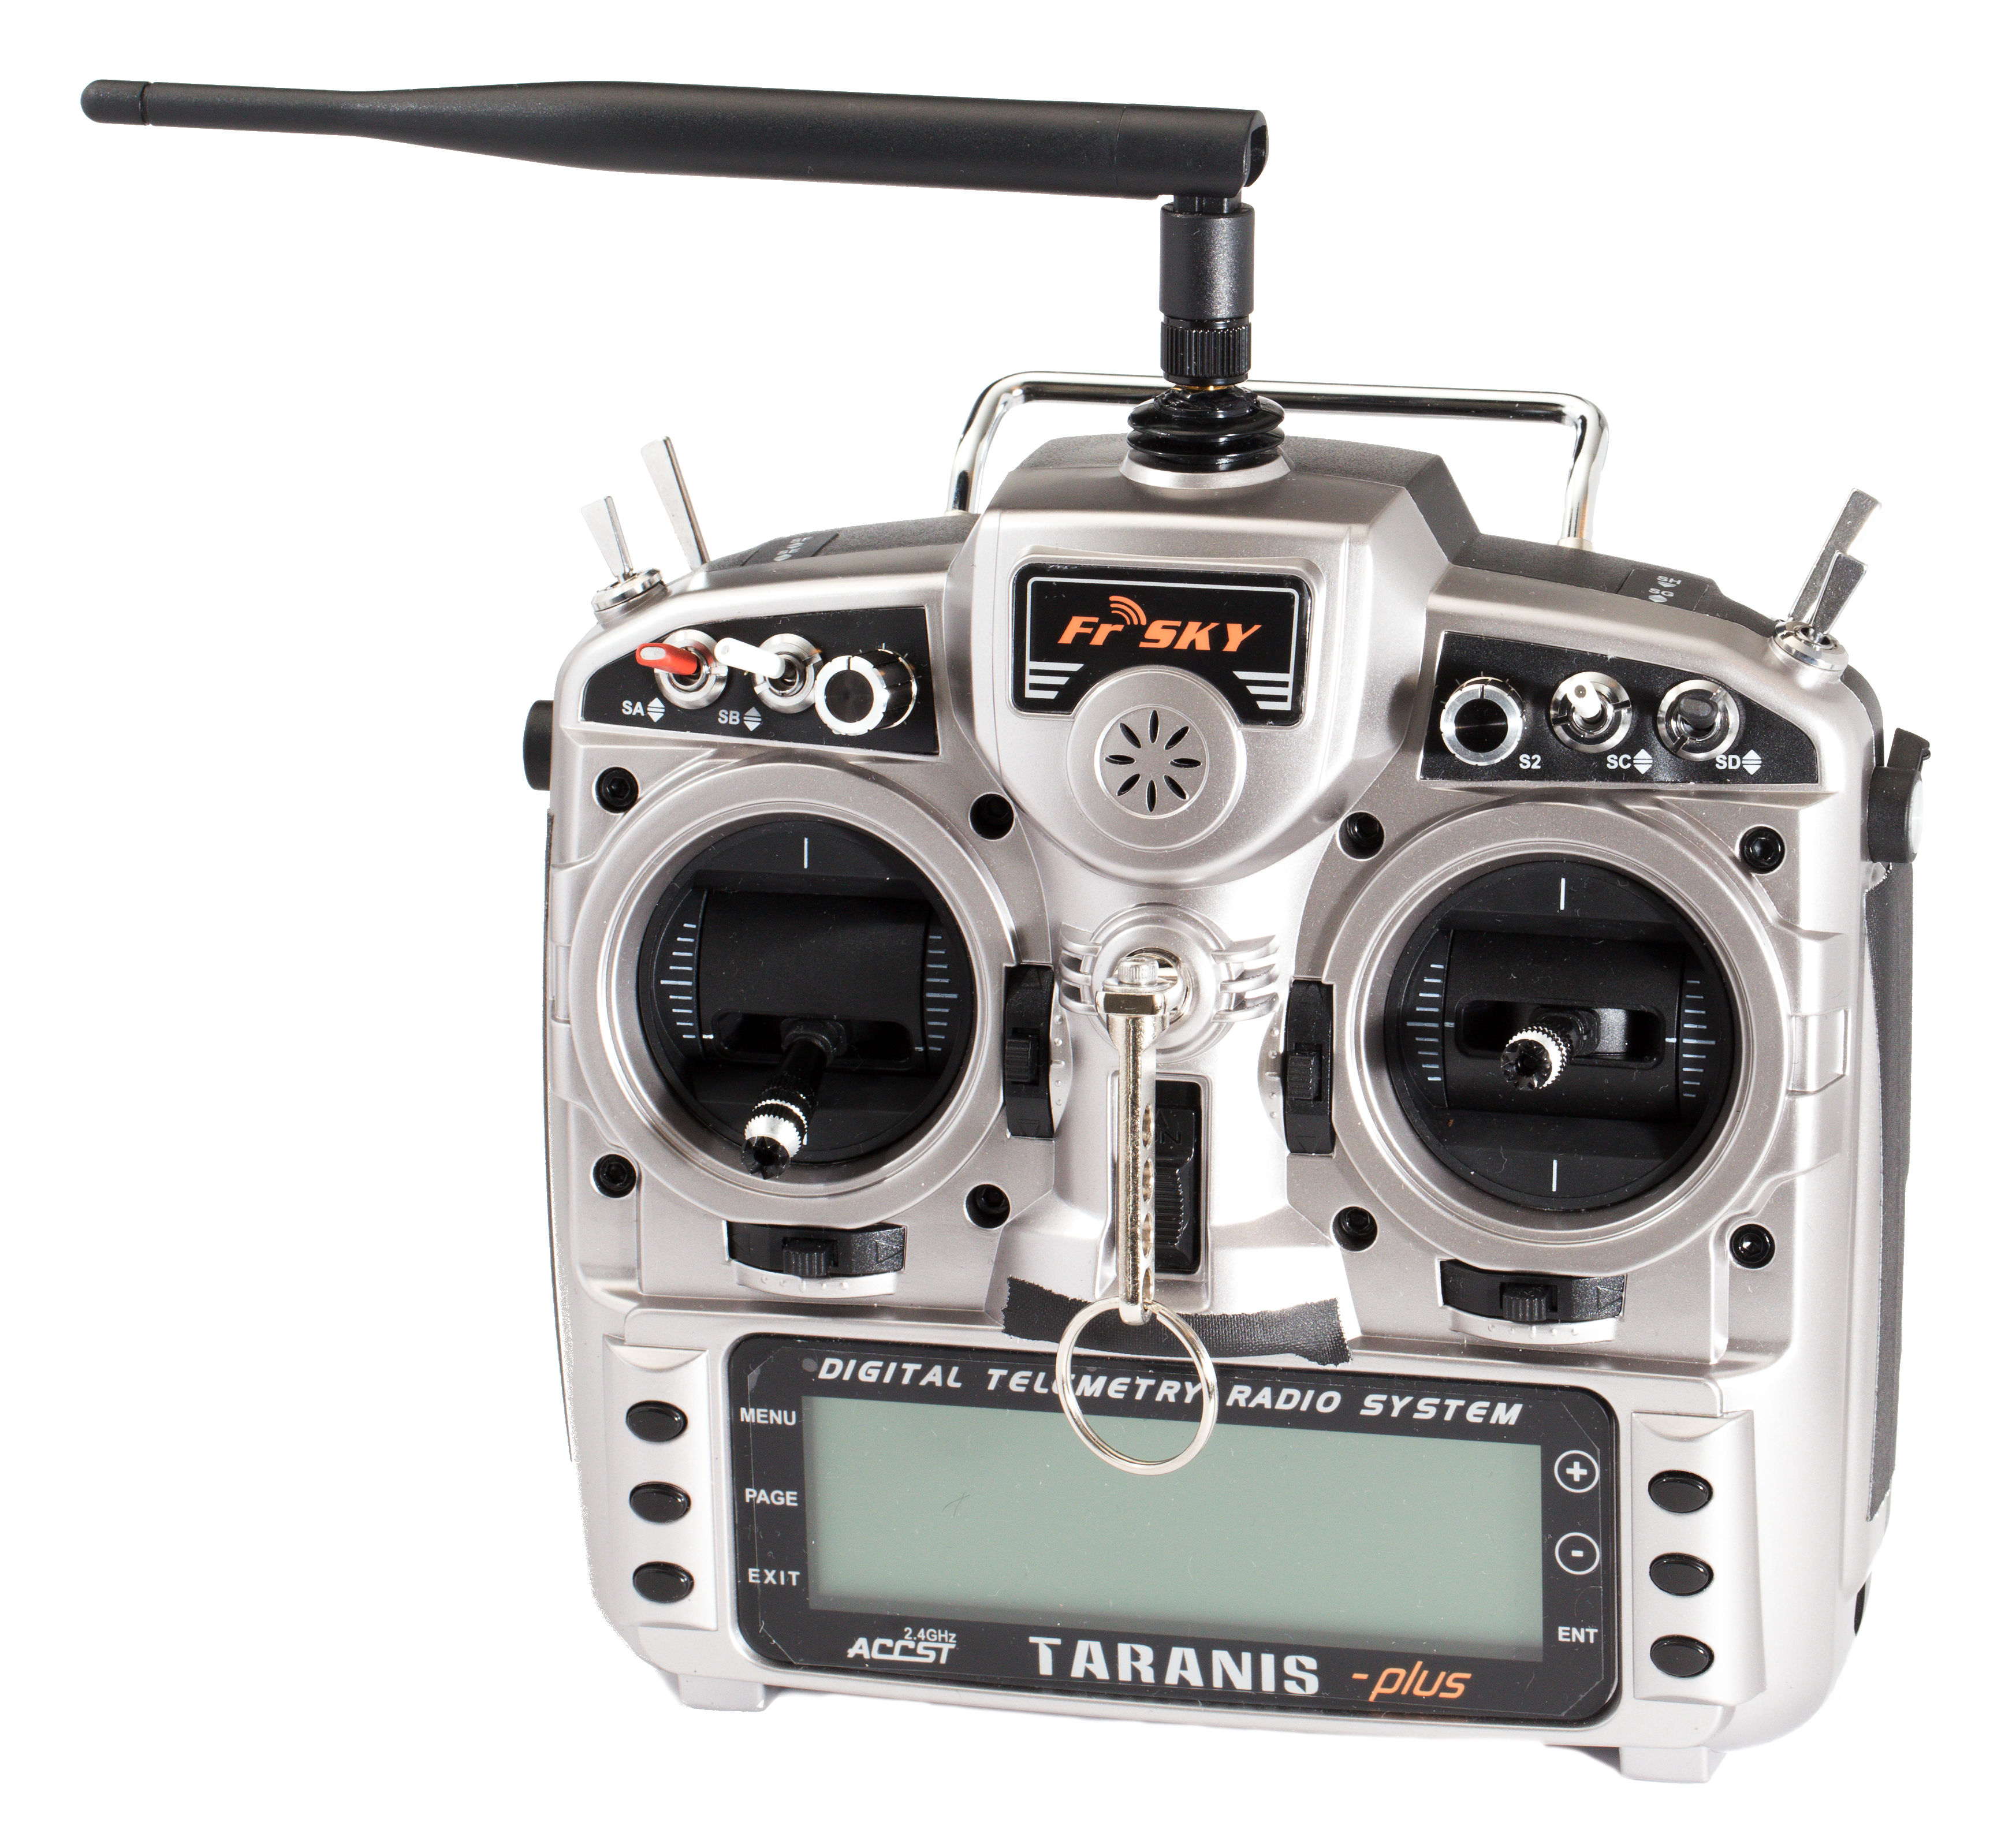 FrSky X9D Taranis plus 2.4 GHz handheld RC transmitter